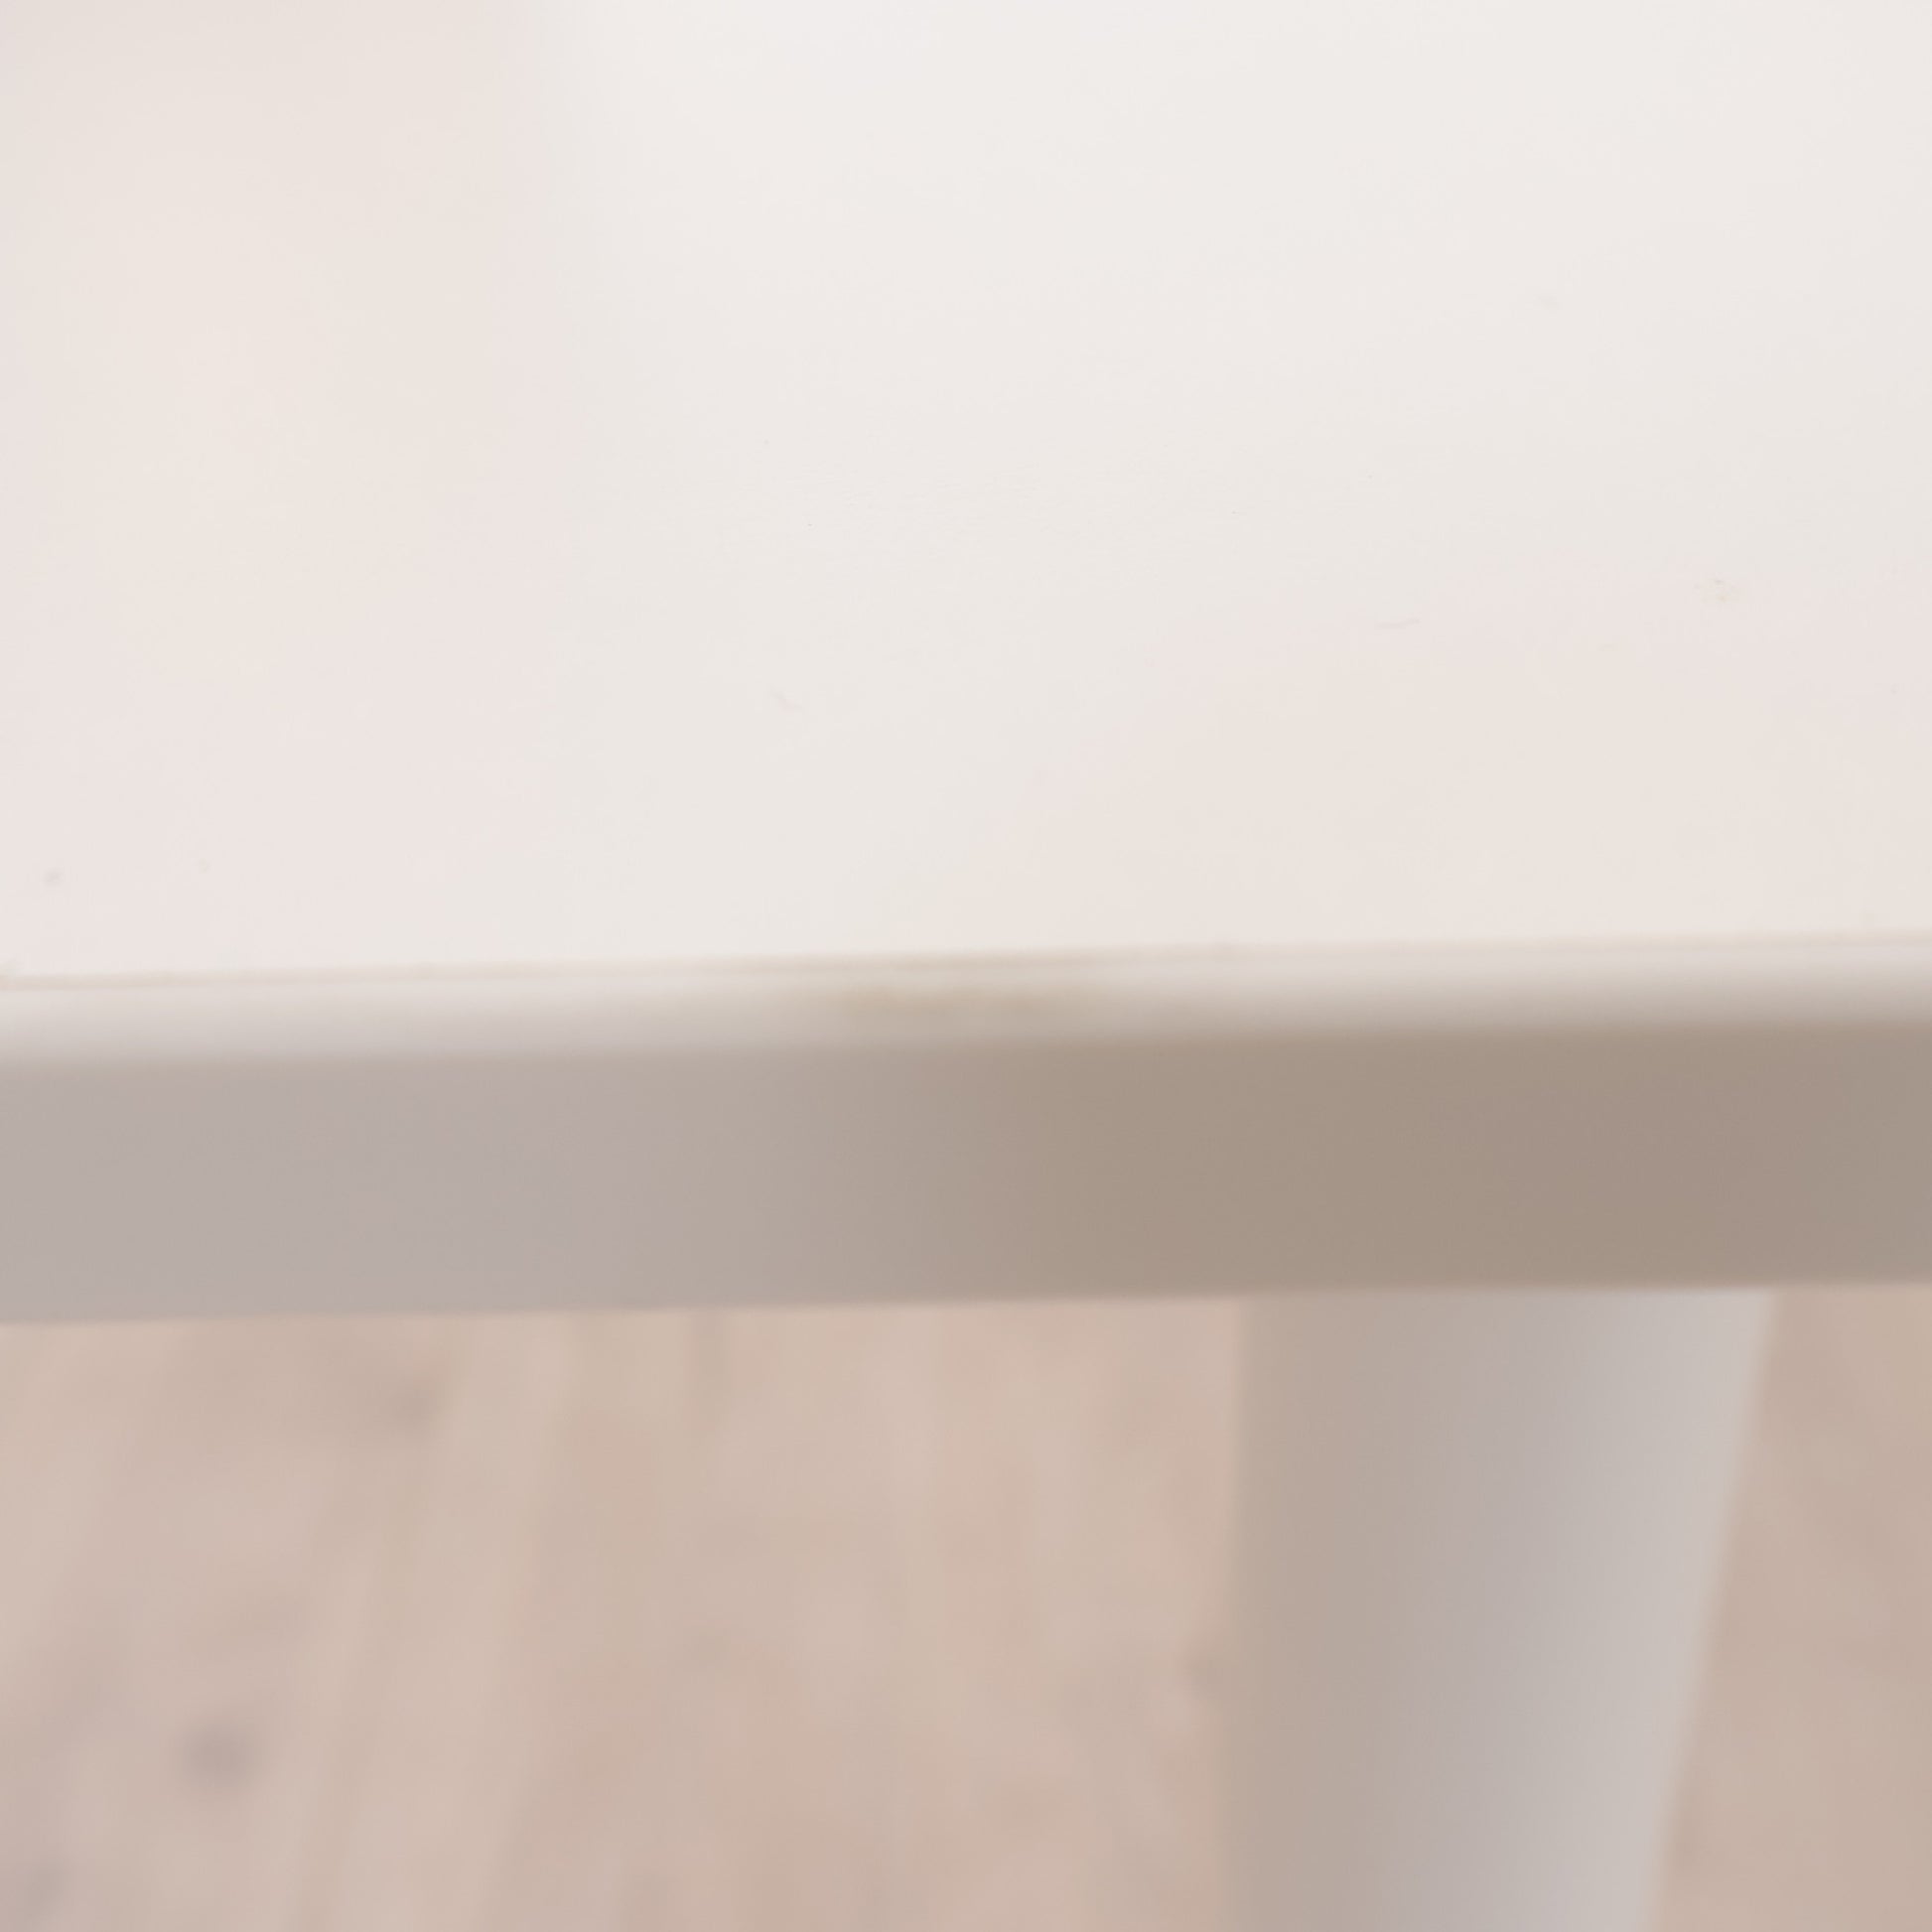 IKEA Bekant helhvit skrivebord/arbeidsbord, 120x80 cm